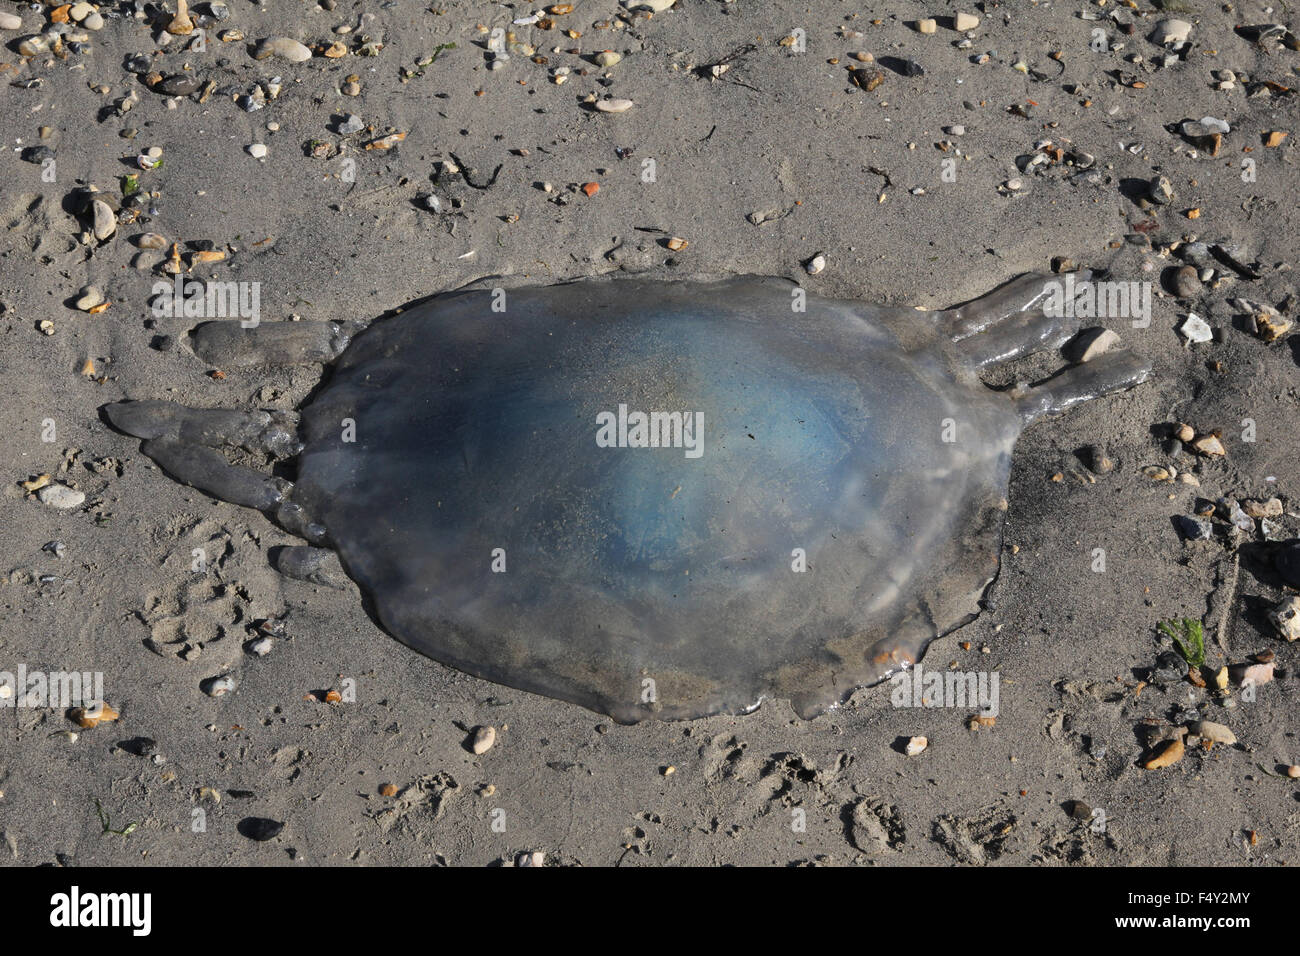 Barrel Jellyfish rhizostoma pulmo washed up on beach Stock Photo